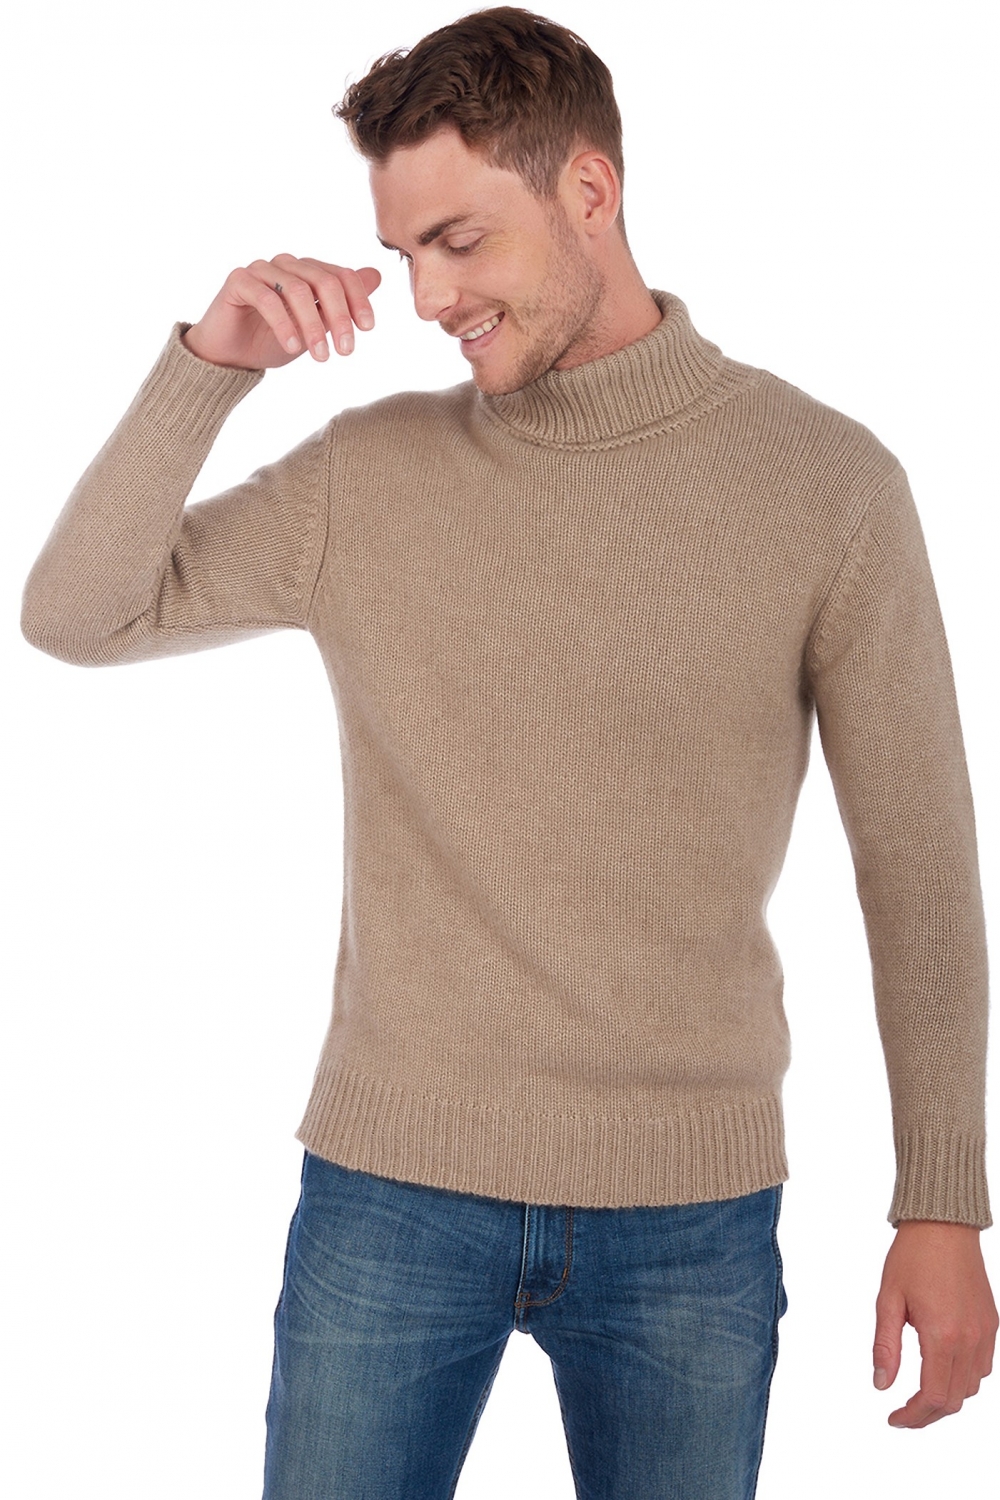 Cashmere men our full range of men s sweaters artemi natural stone l